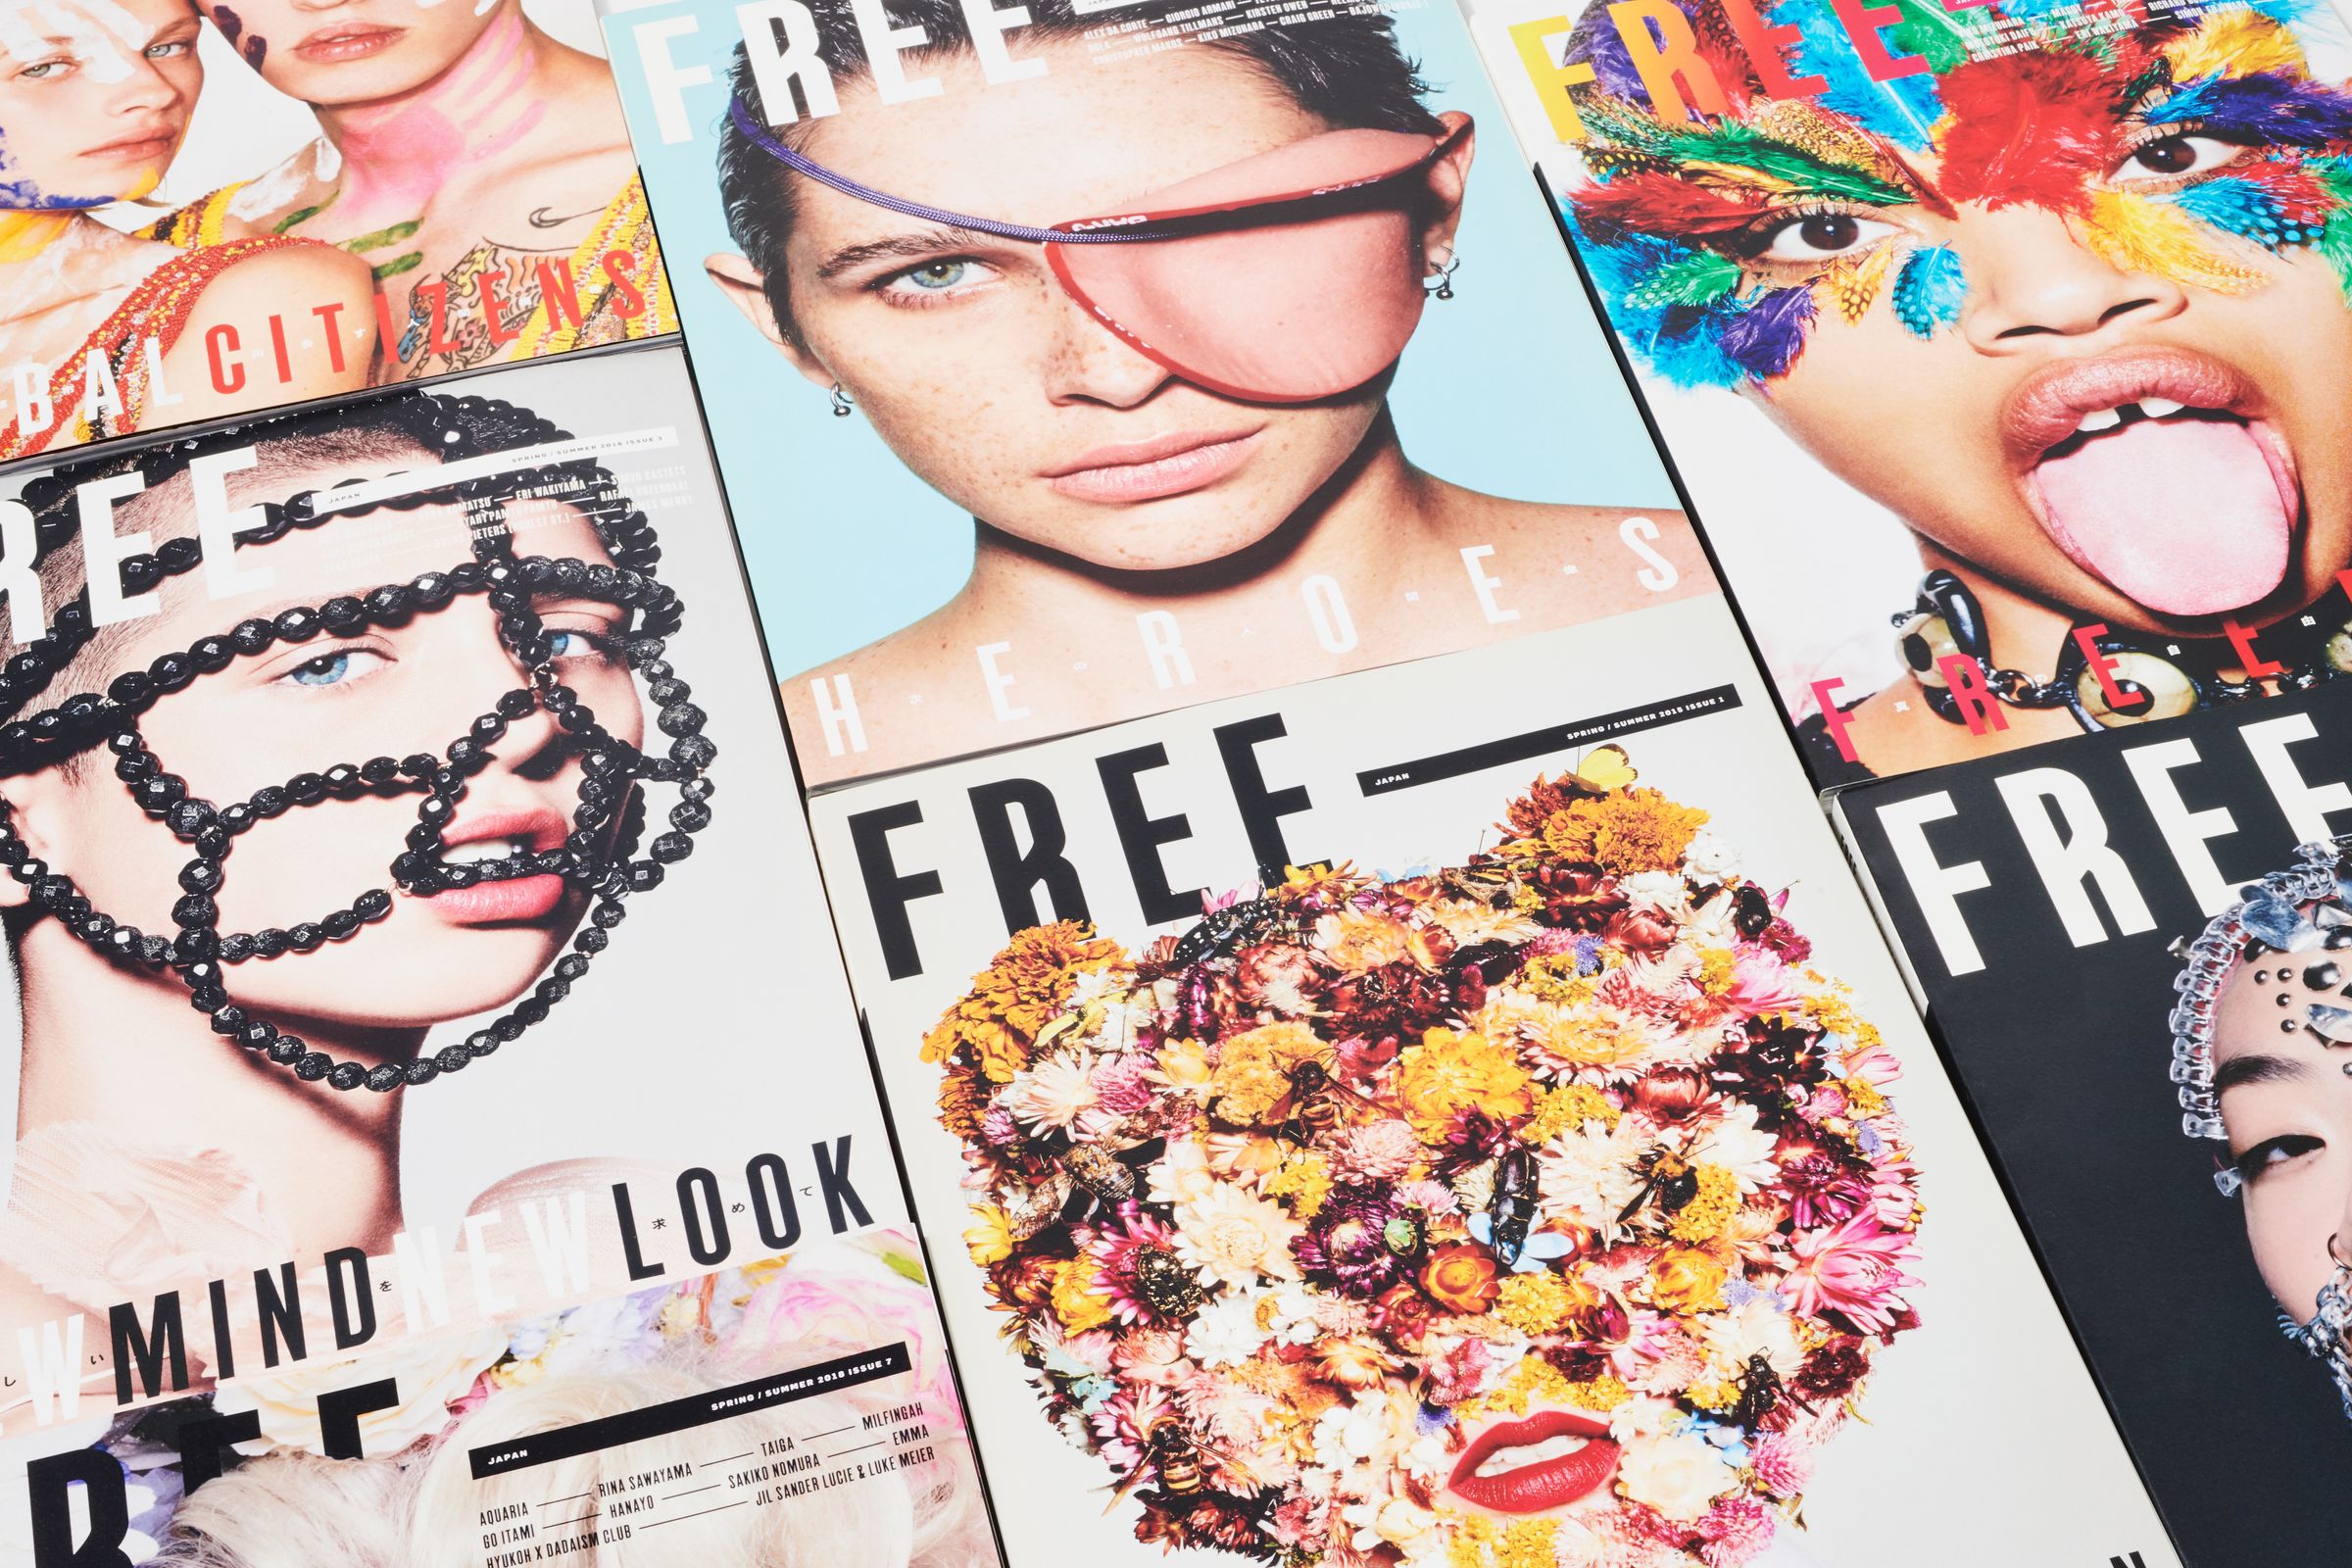 FREE Magazine covers